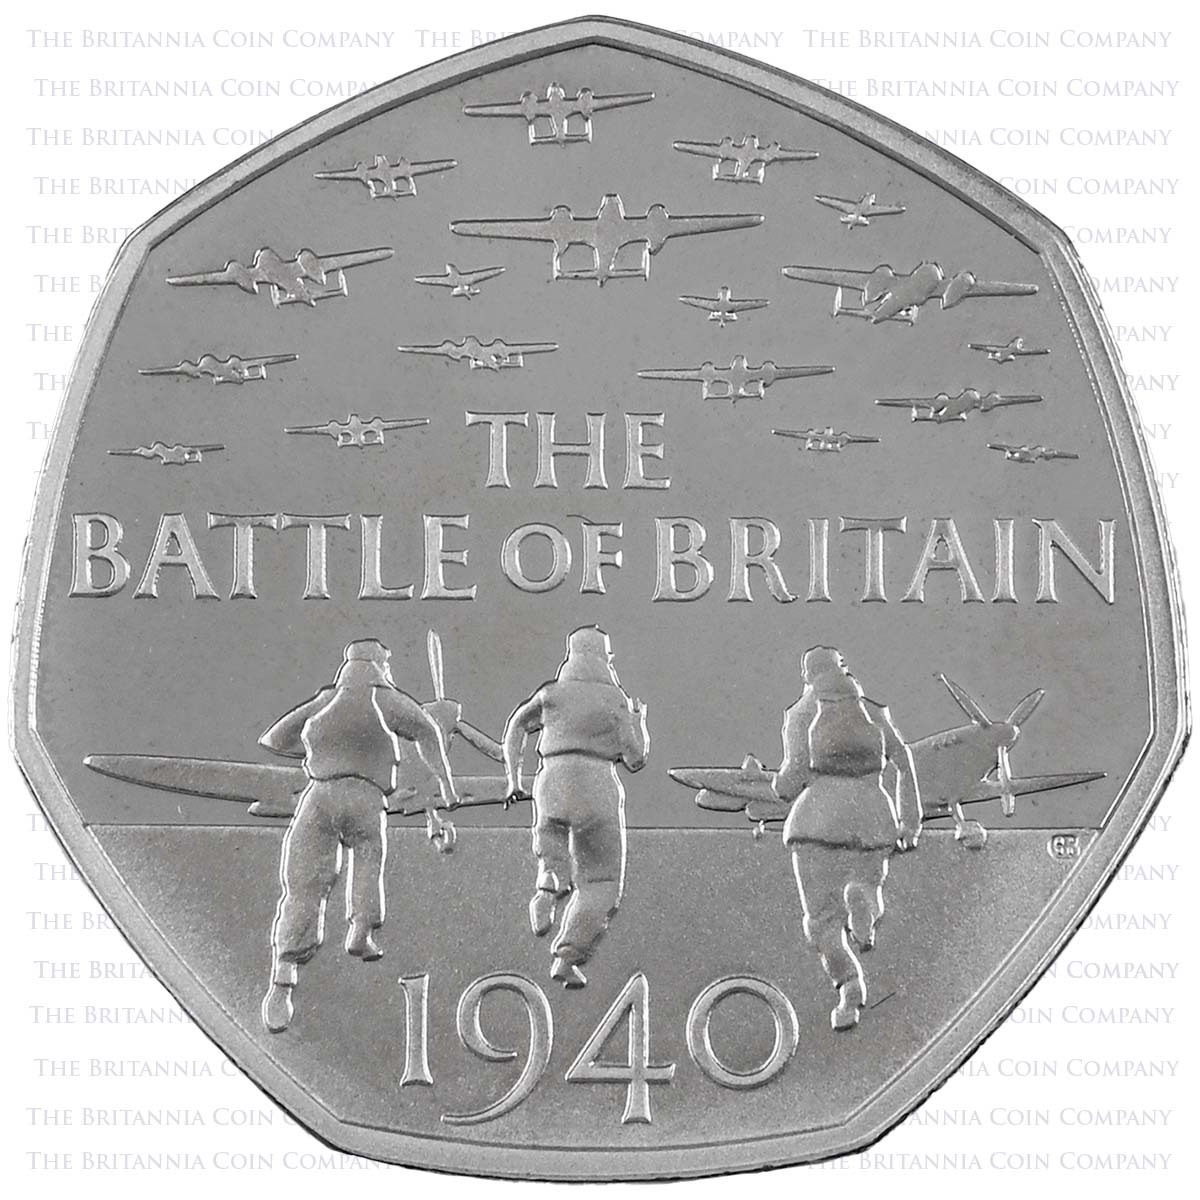 UK15PFCS 2015 UK Piedfort Silver Proof Annual Set Battle of Britain Reverse